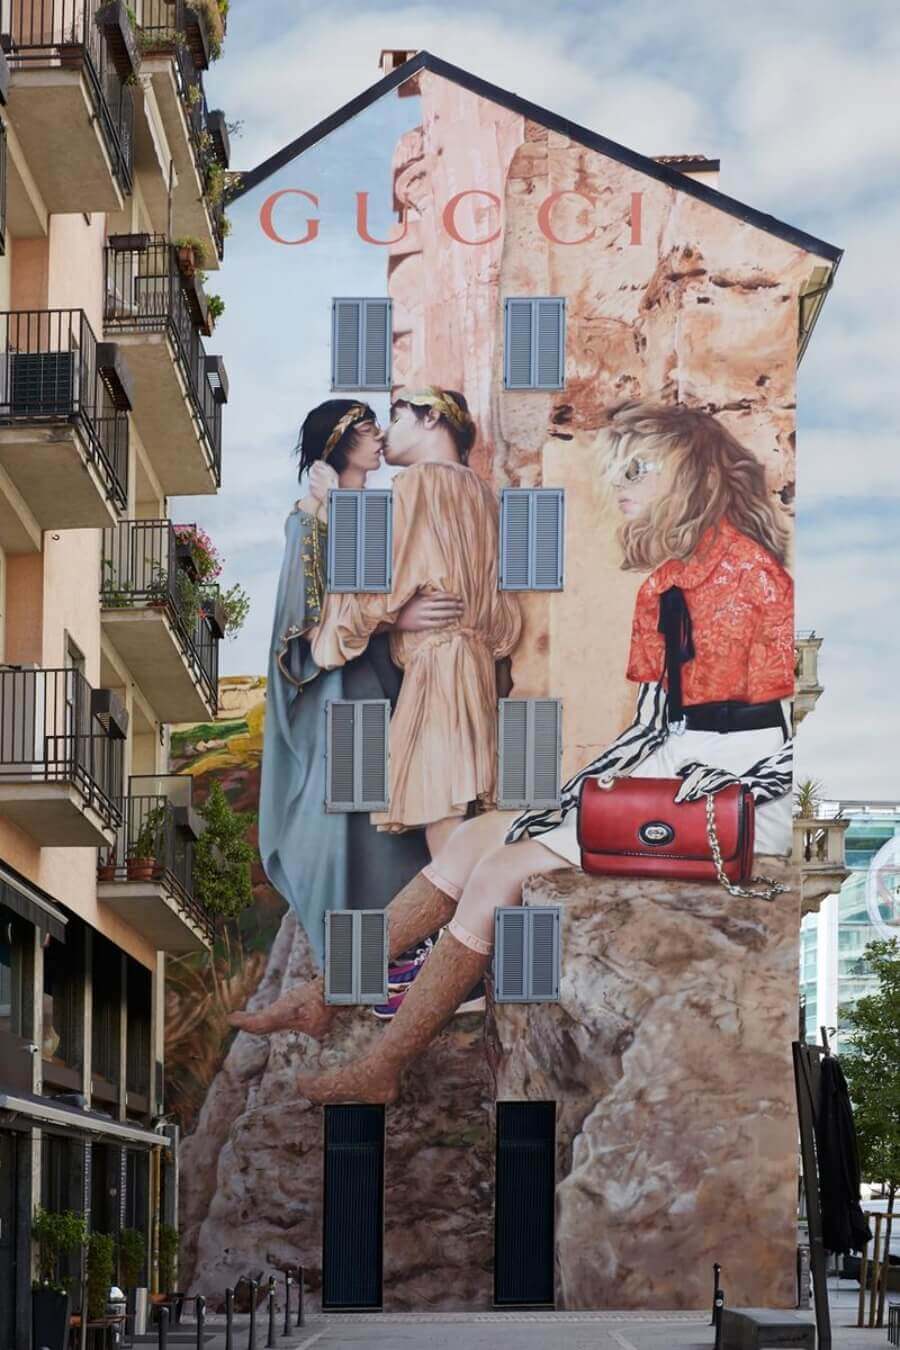 mural de Gucci y Art Wall